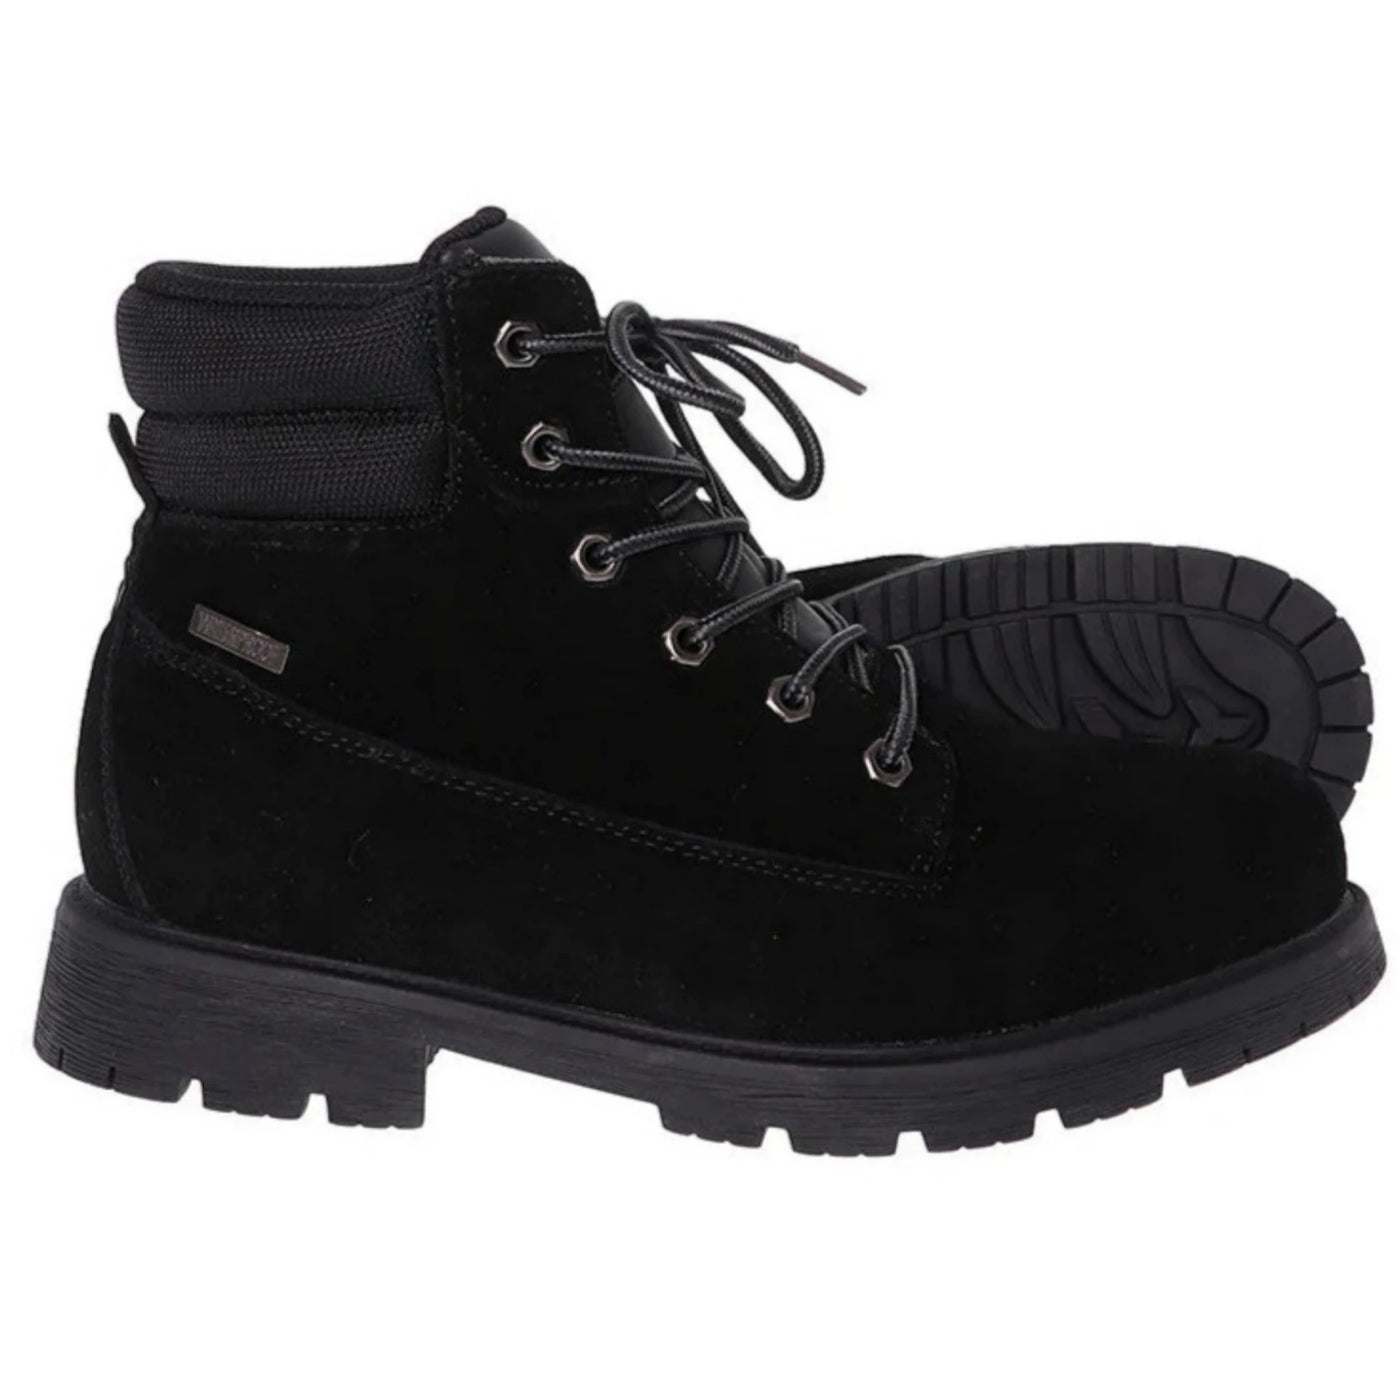 XTM Men's Costa Snow Boots - Black